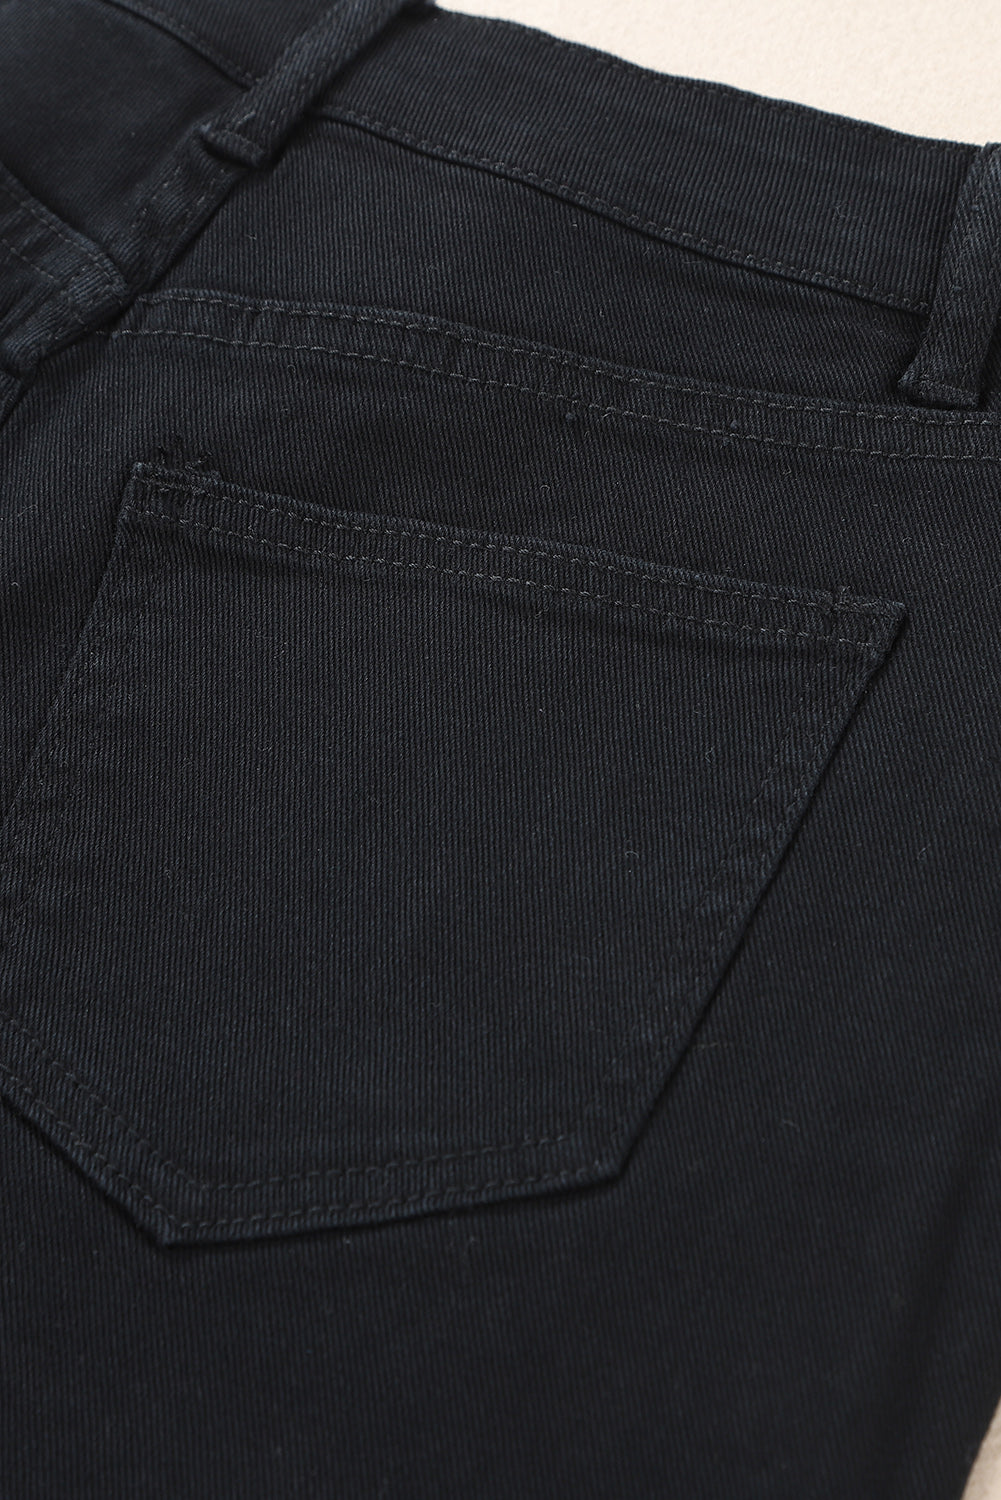 Black Asymmetrical Ripped Denim Shorts